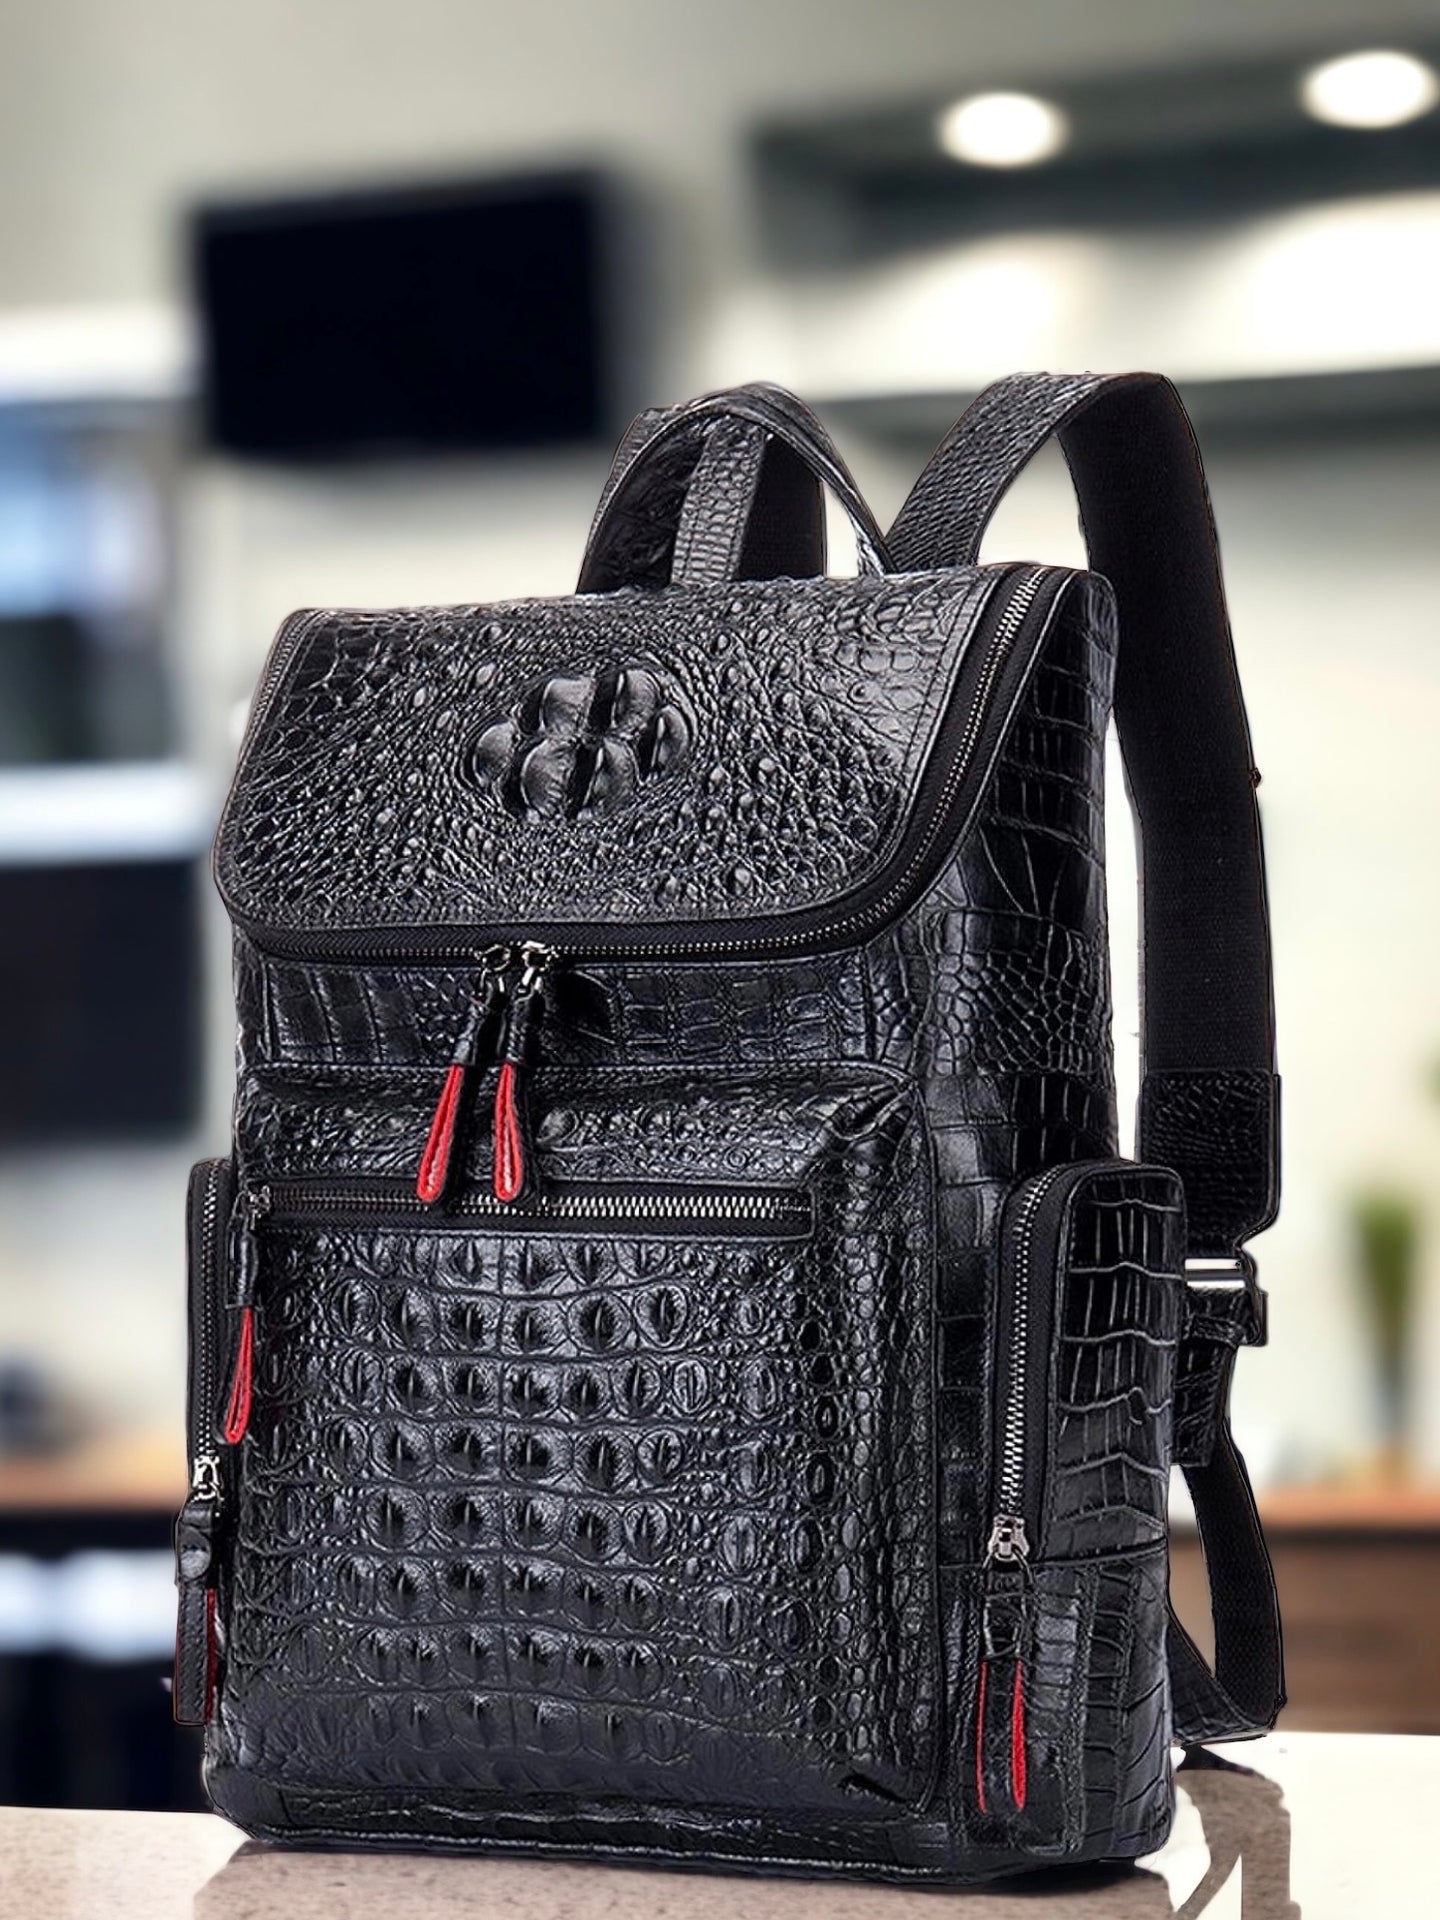 SPI Styles’s Leather Laptop Backpack, Travel Bag Daypack for Men, Crocodile Pattern